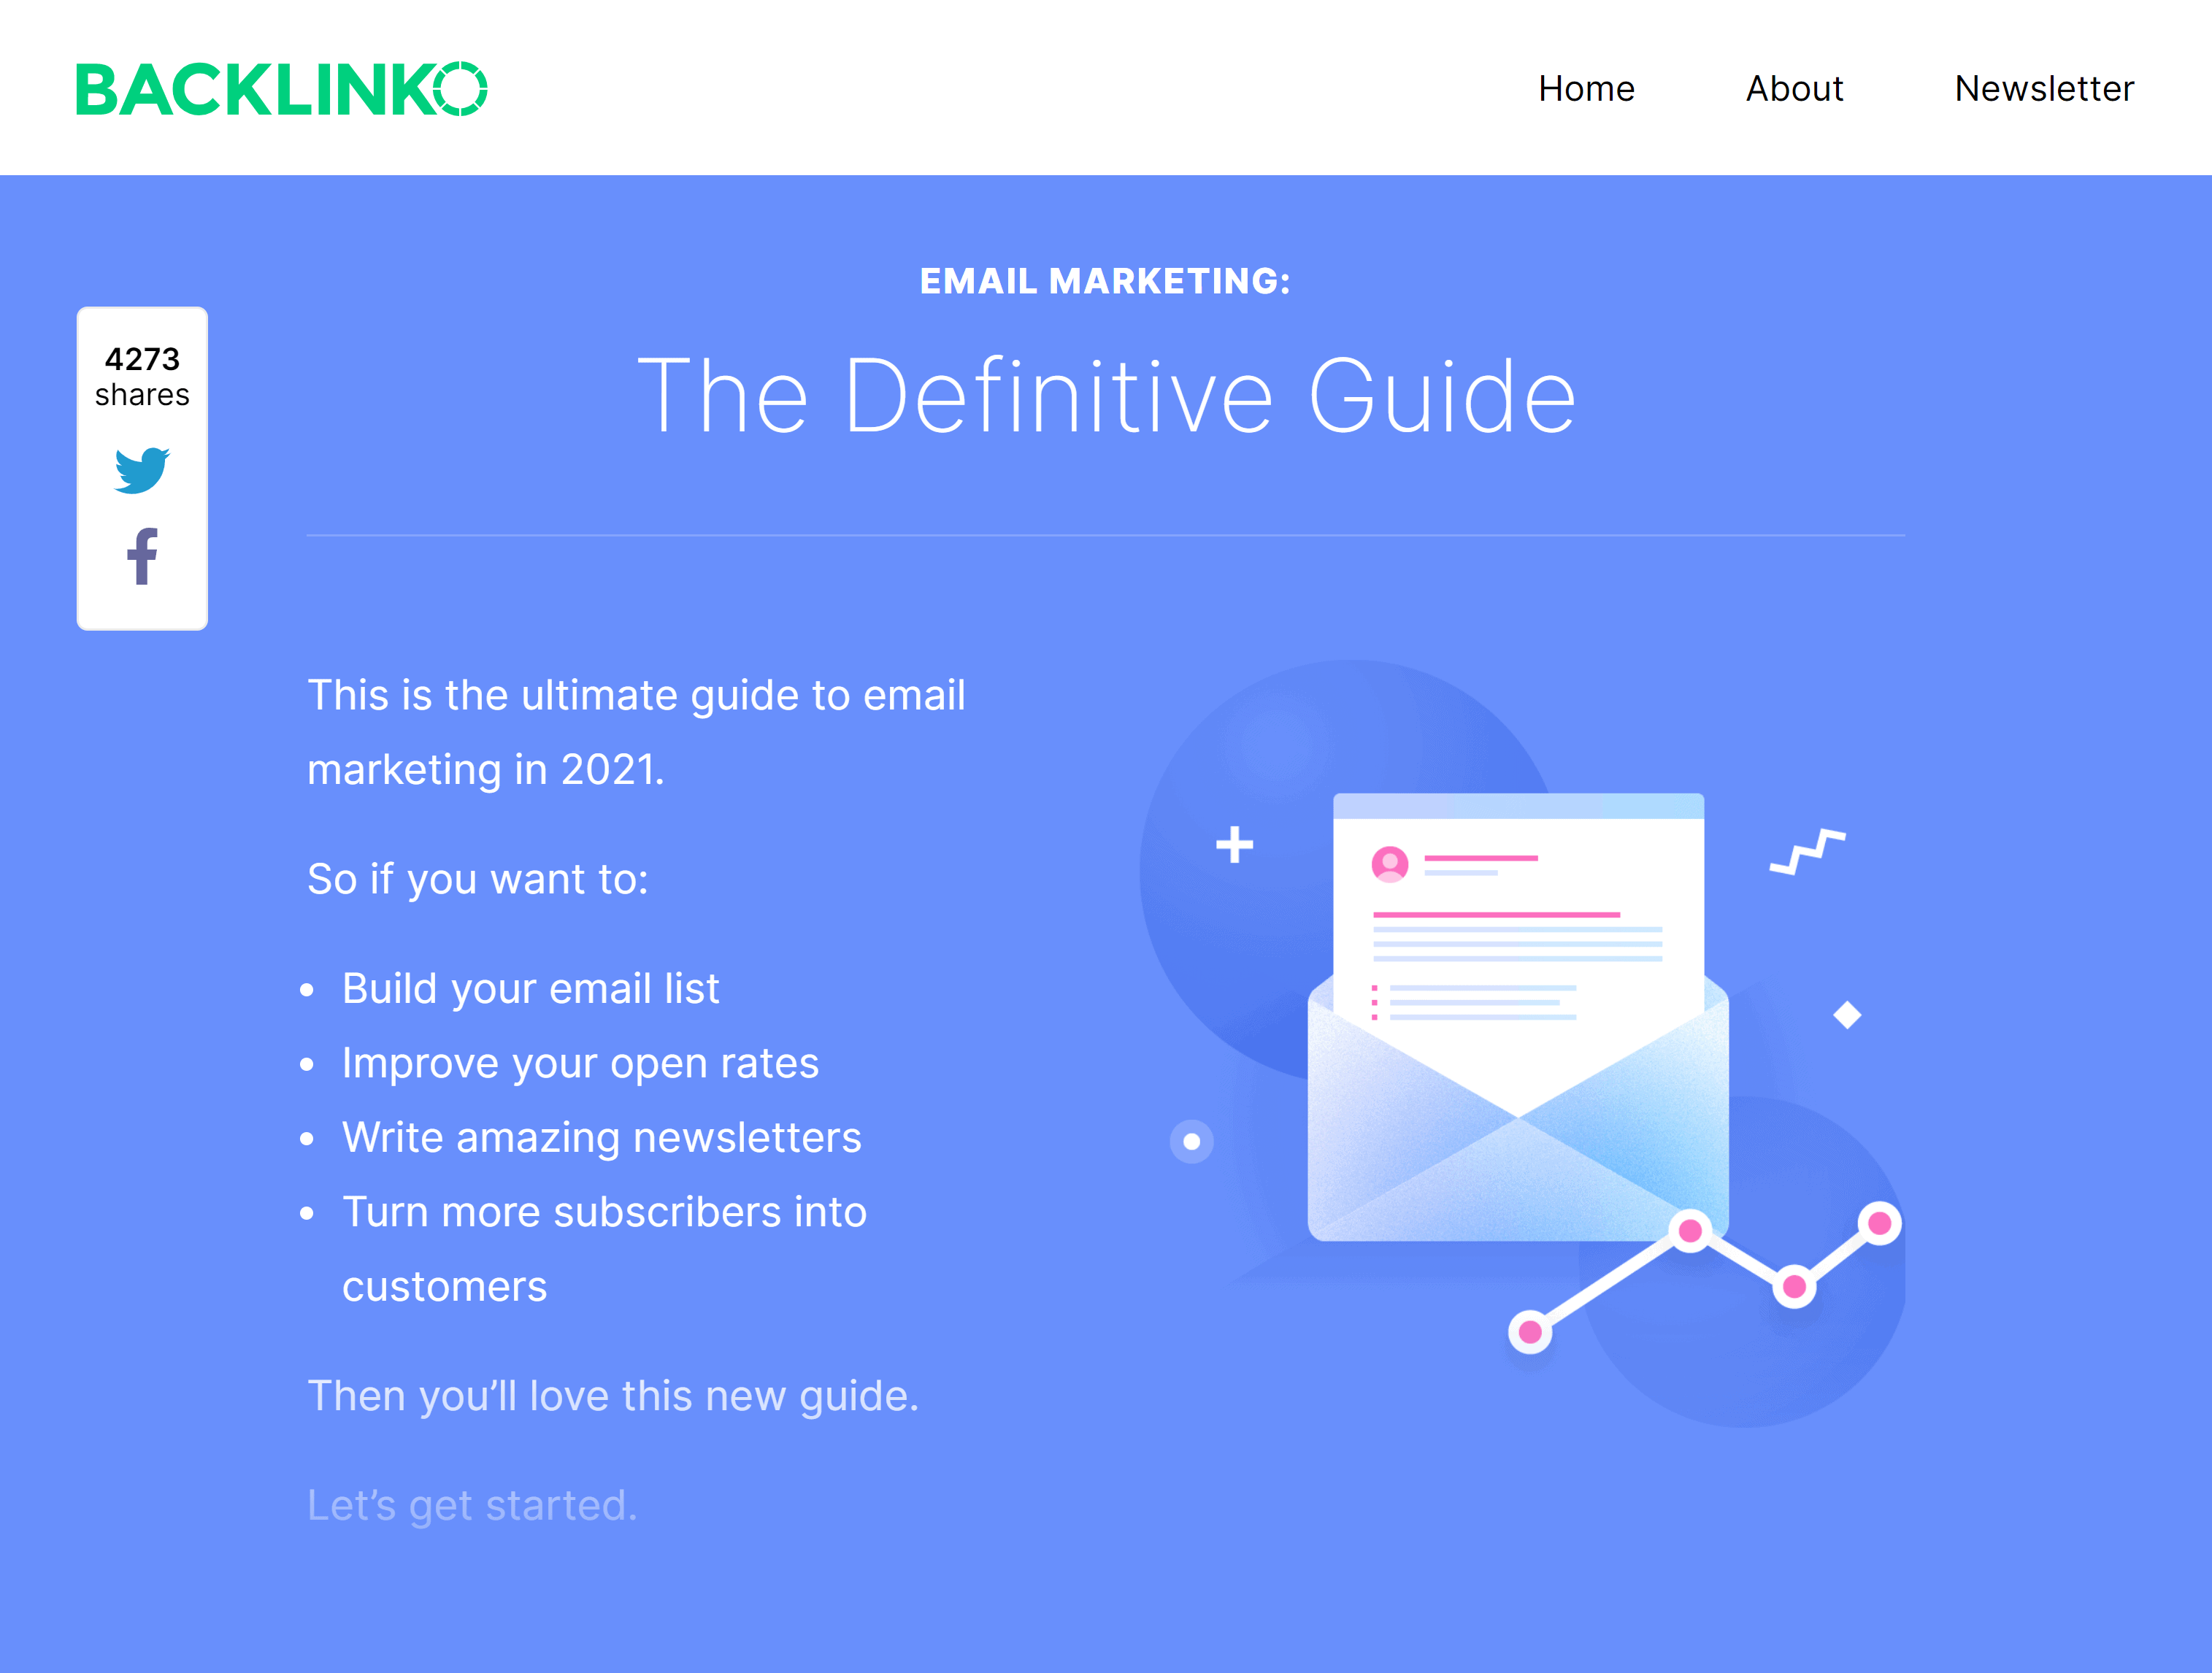 Backlinko – Email marketing guide